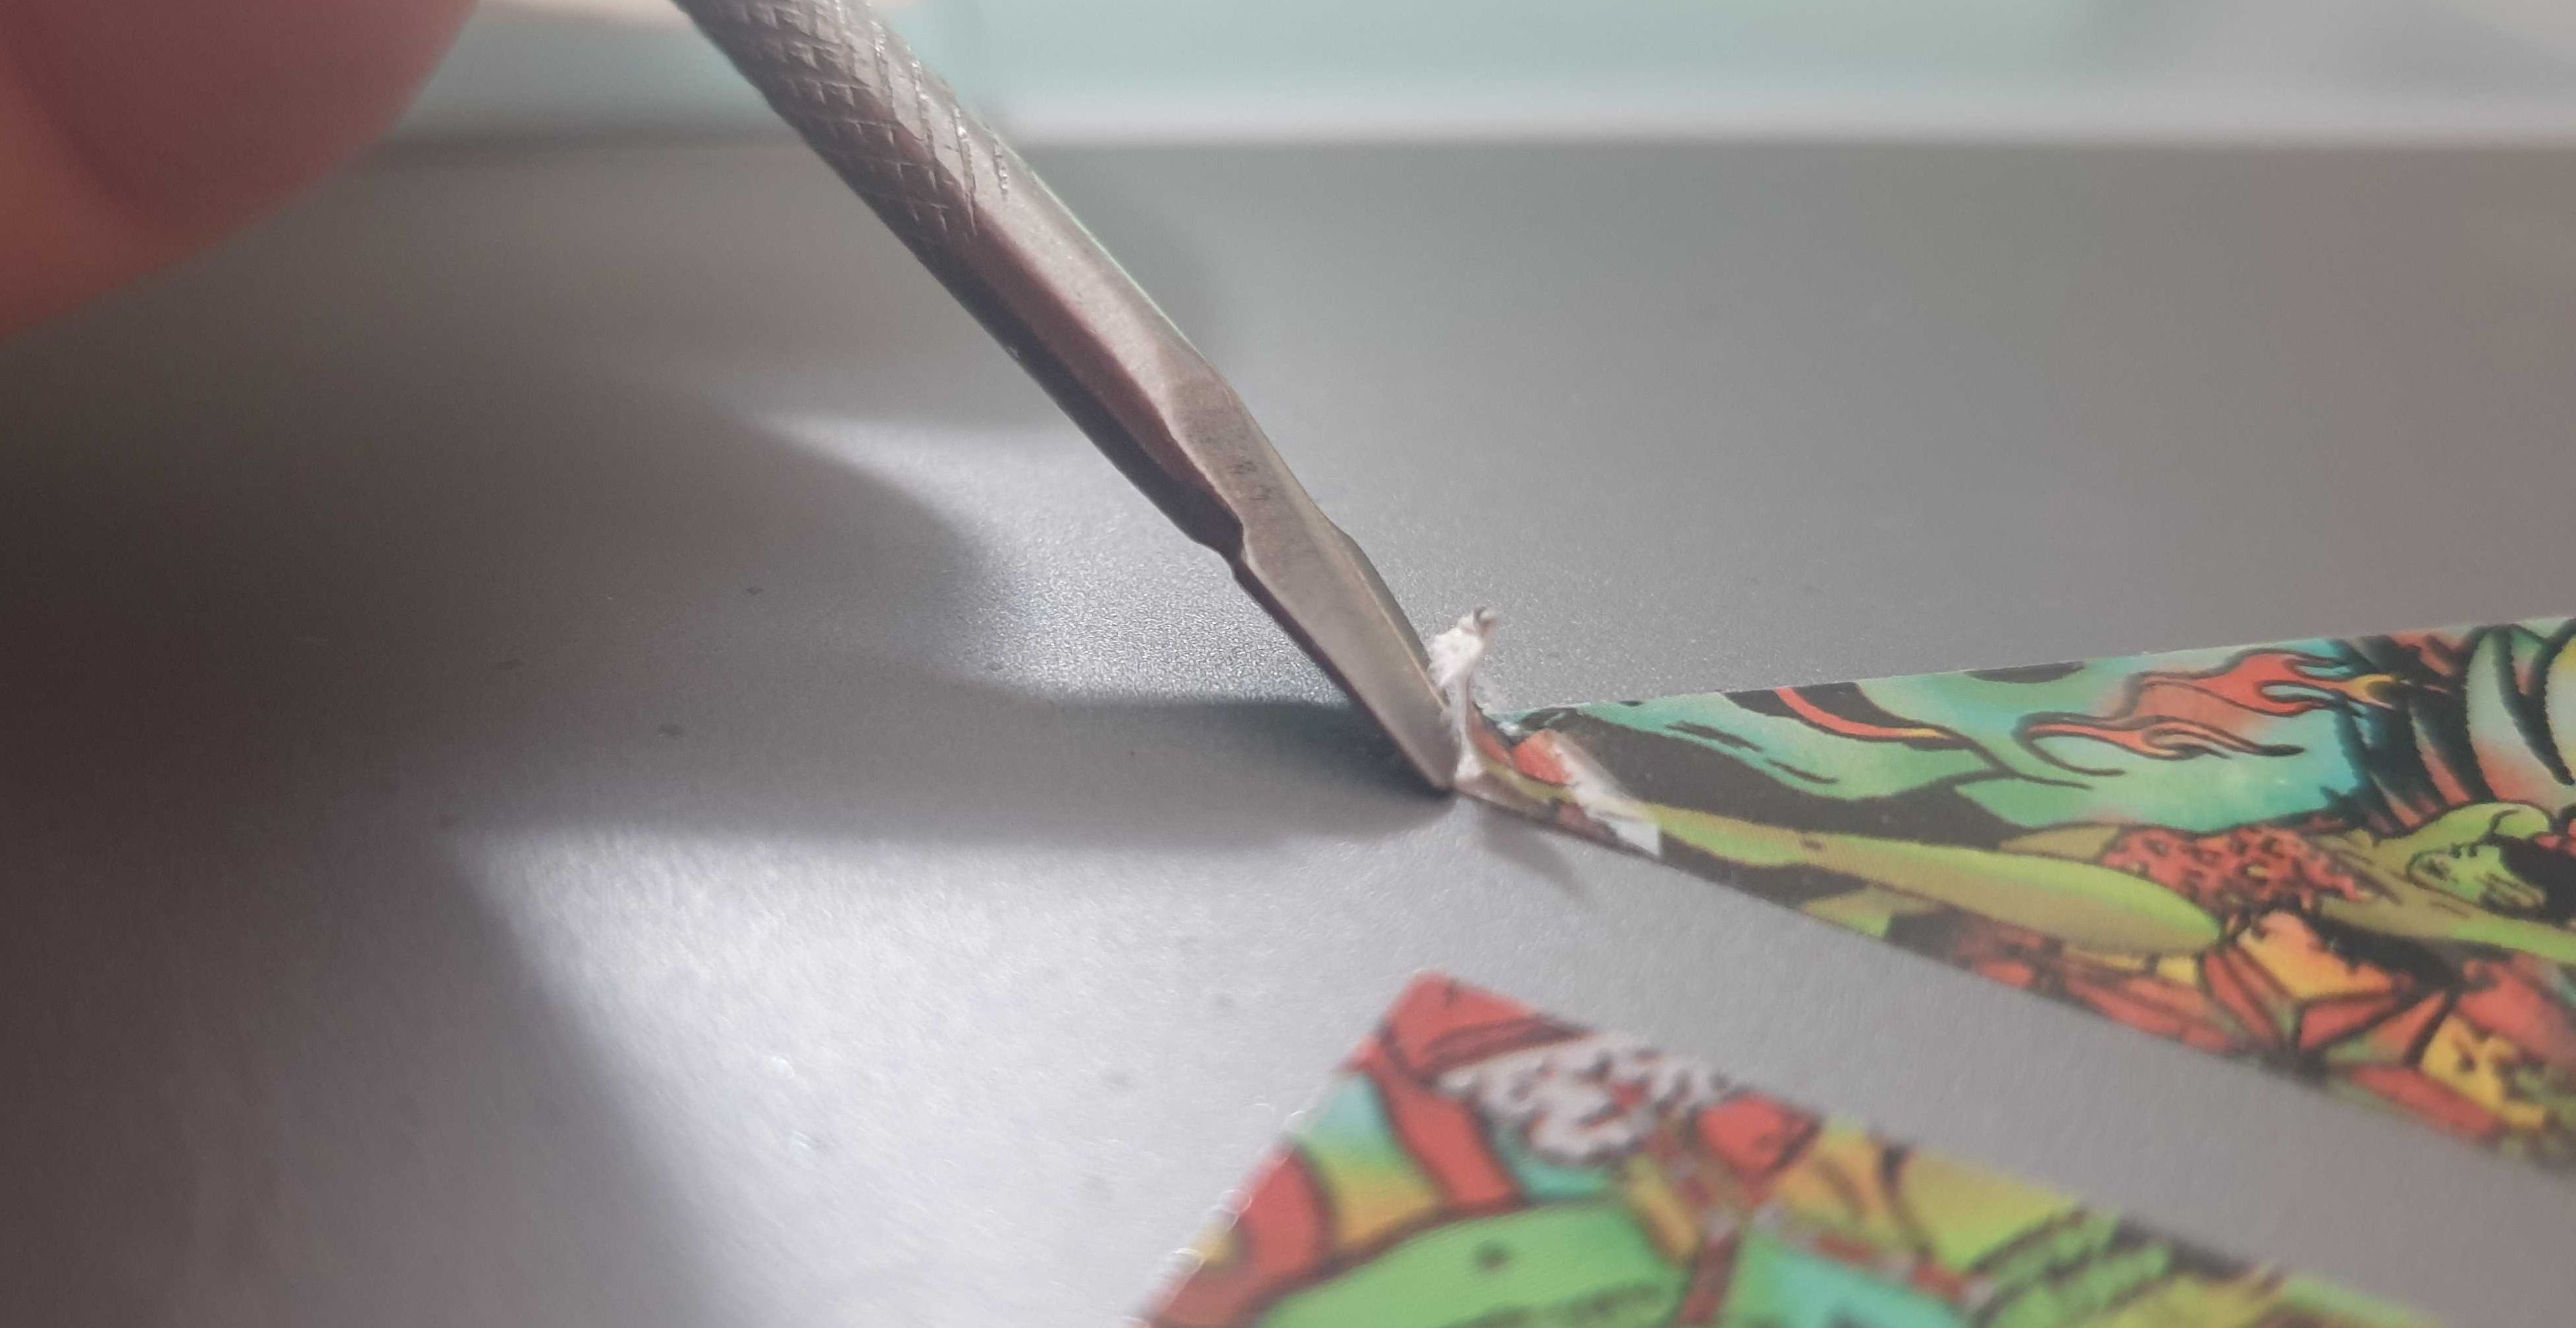 nail tool removing laptop sticker